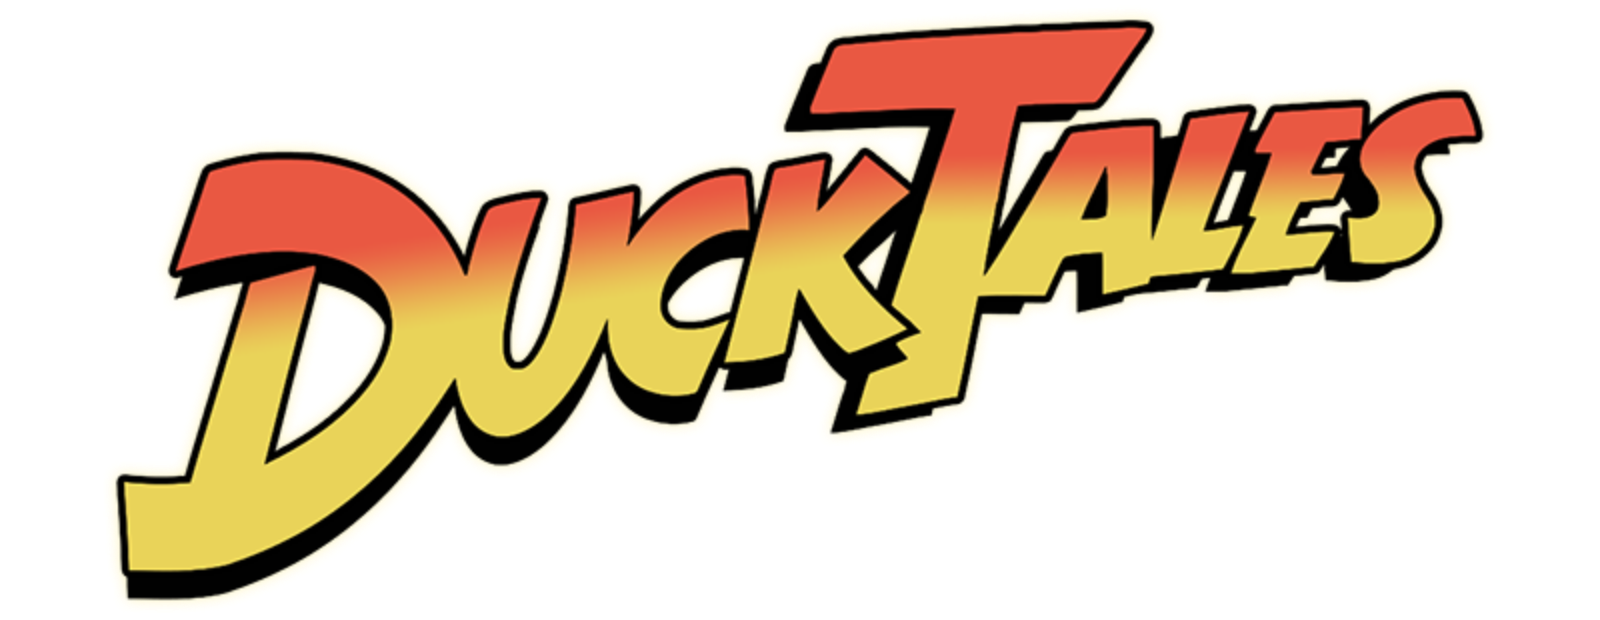 DuckTales 2017 Complete (4 DVD Box Set)